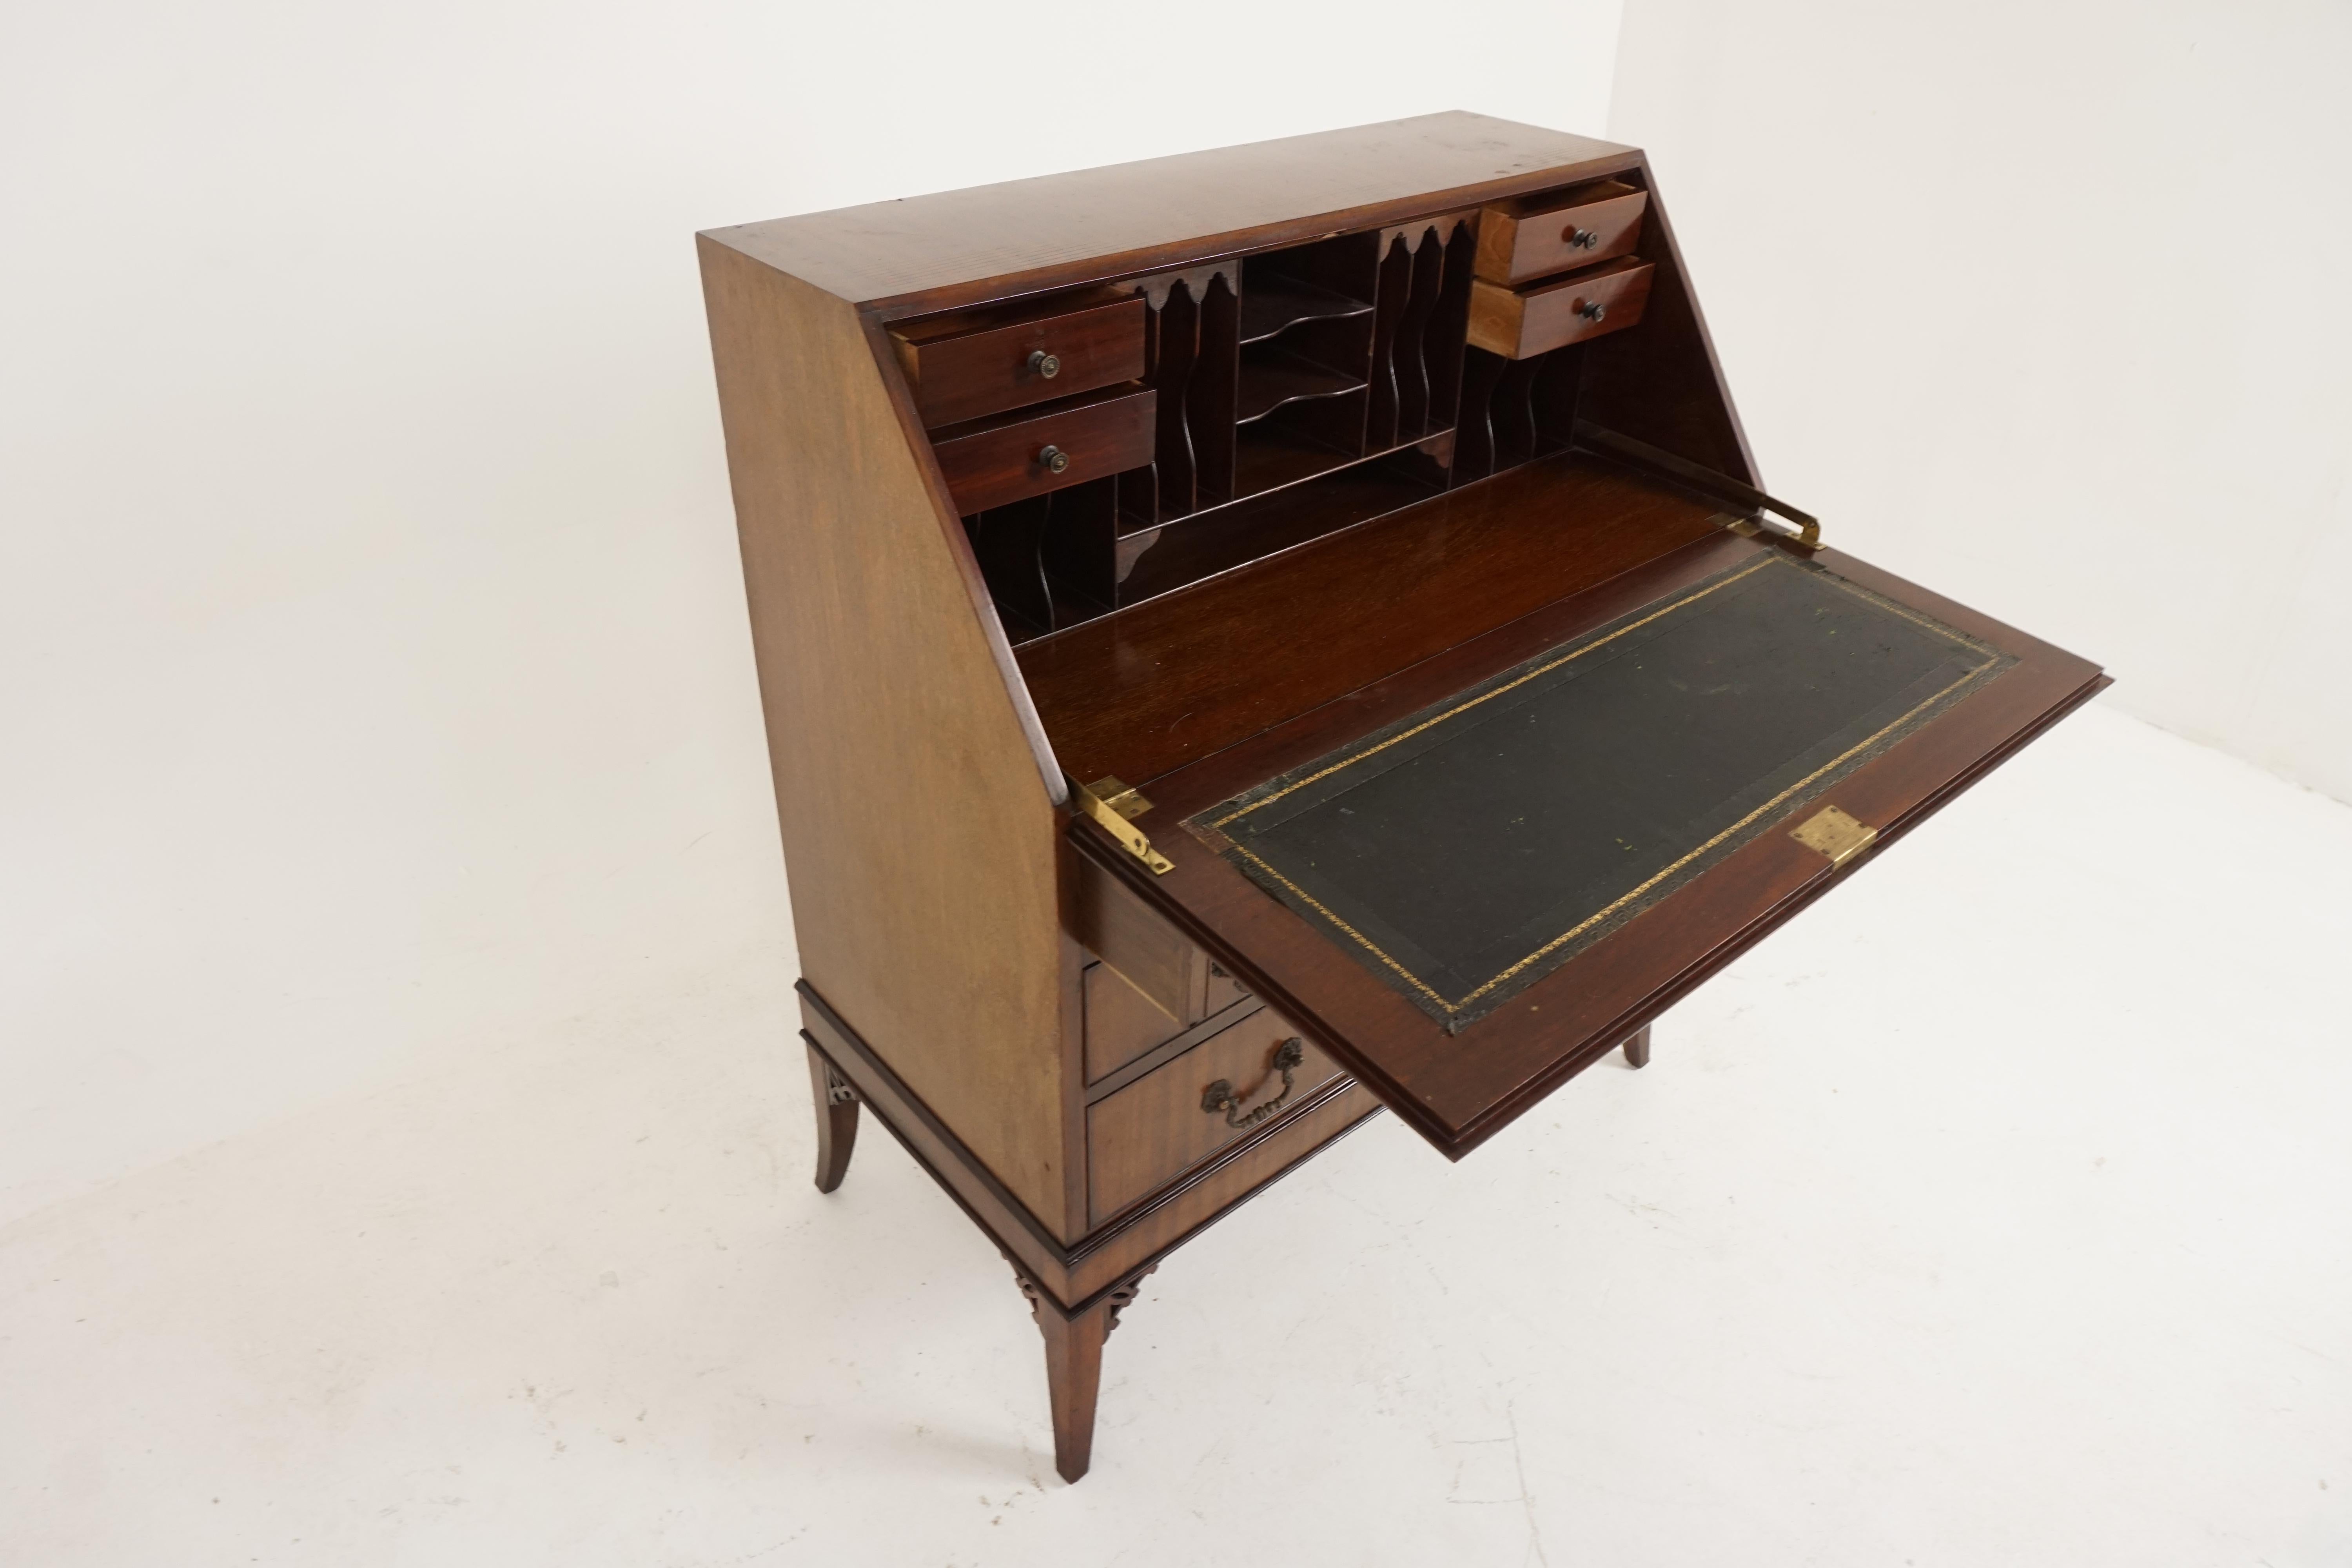 Hand-Crafted Antique Mahogany Desk, Drop Front Writing Desk, Scotland 1920, B2172